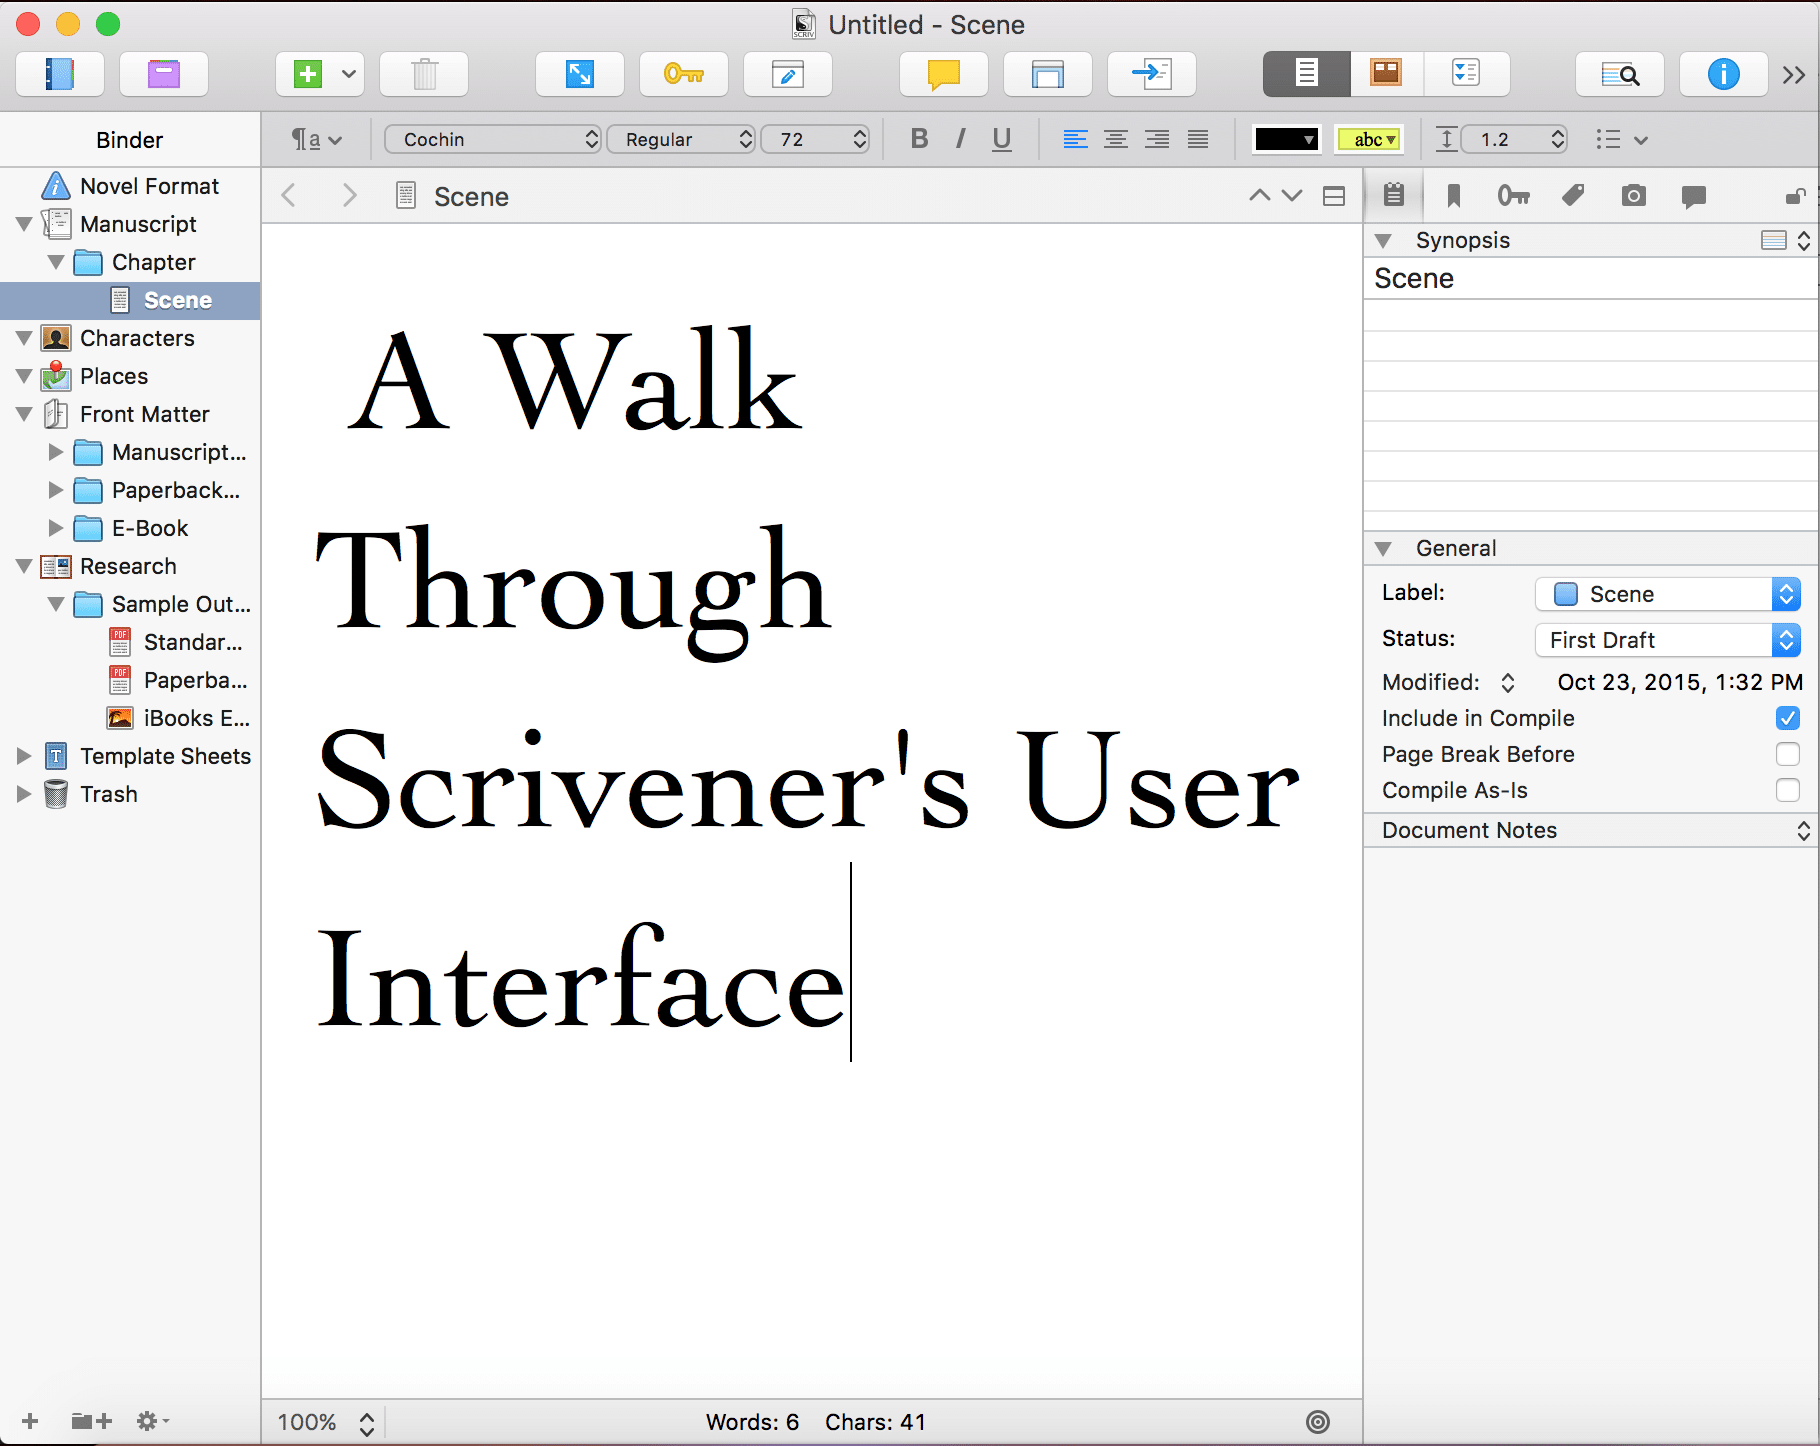 A Walk Through Scrivener's User Interface